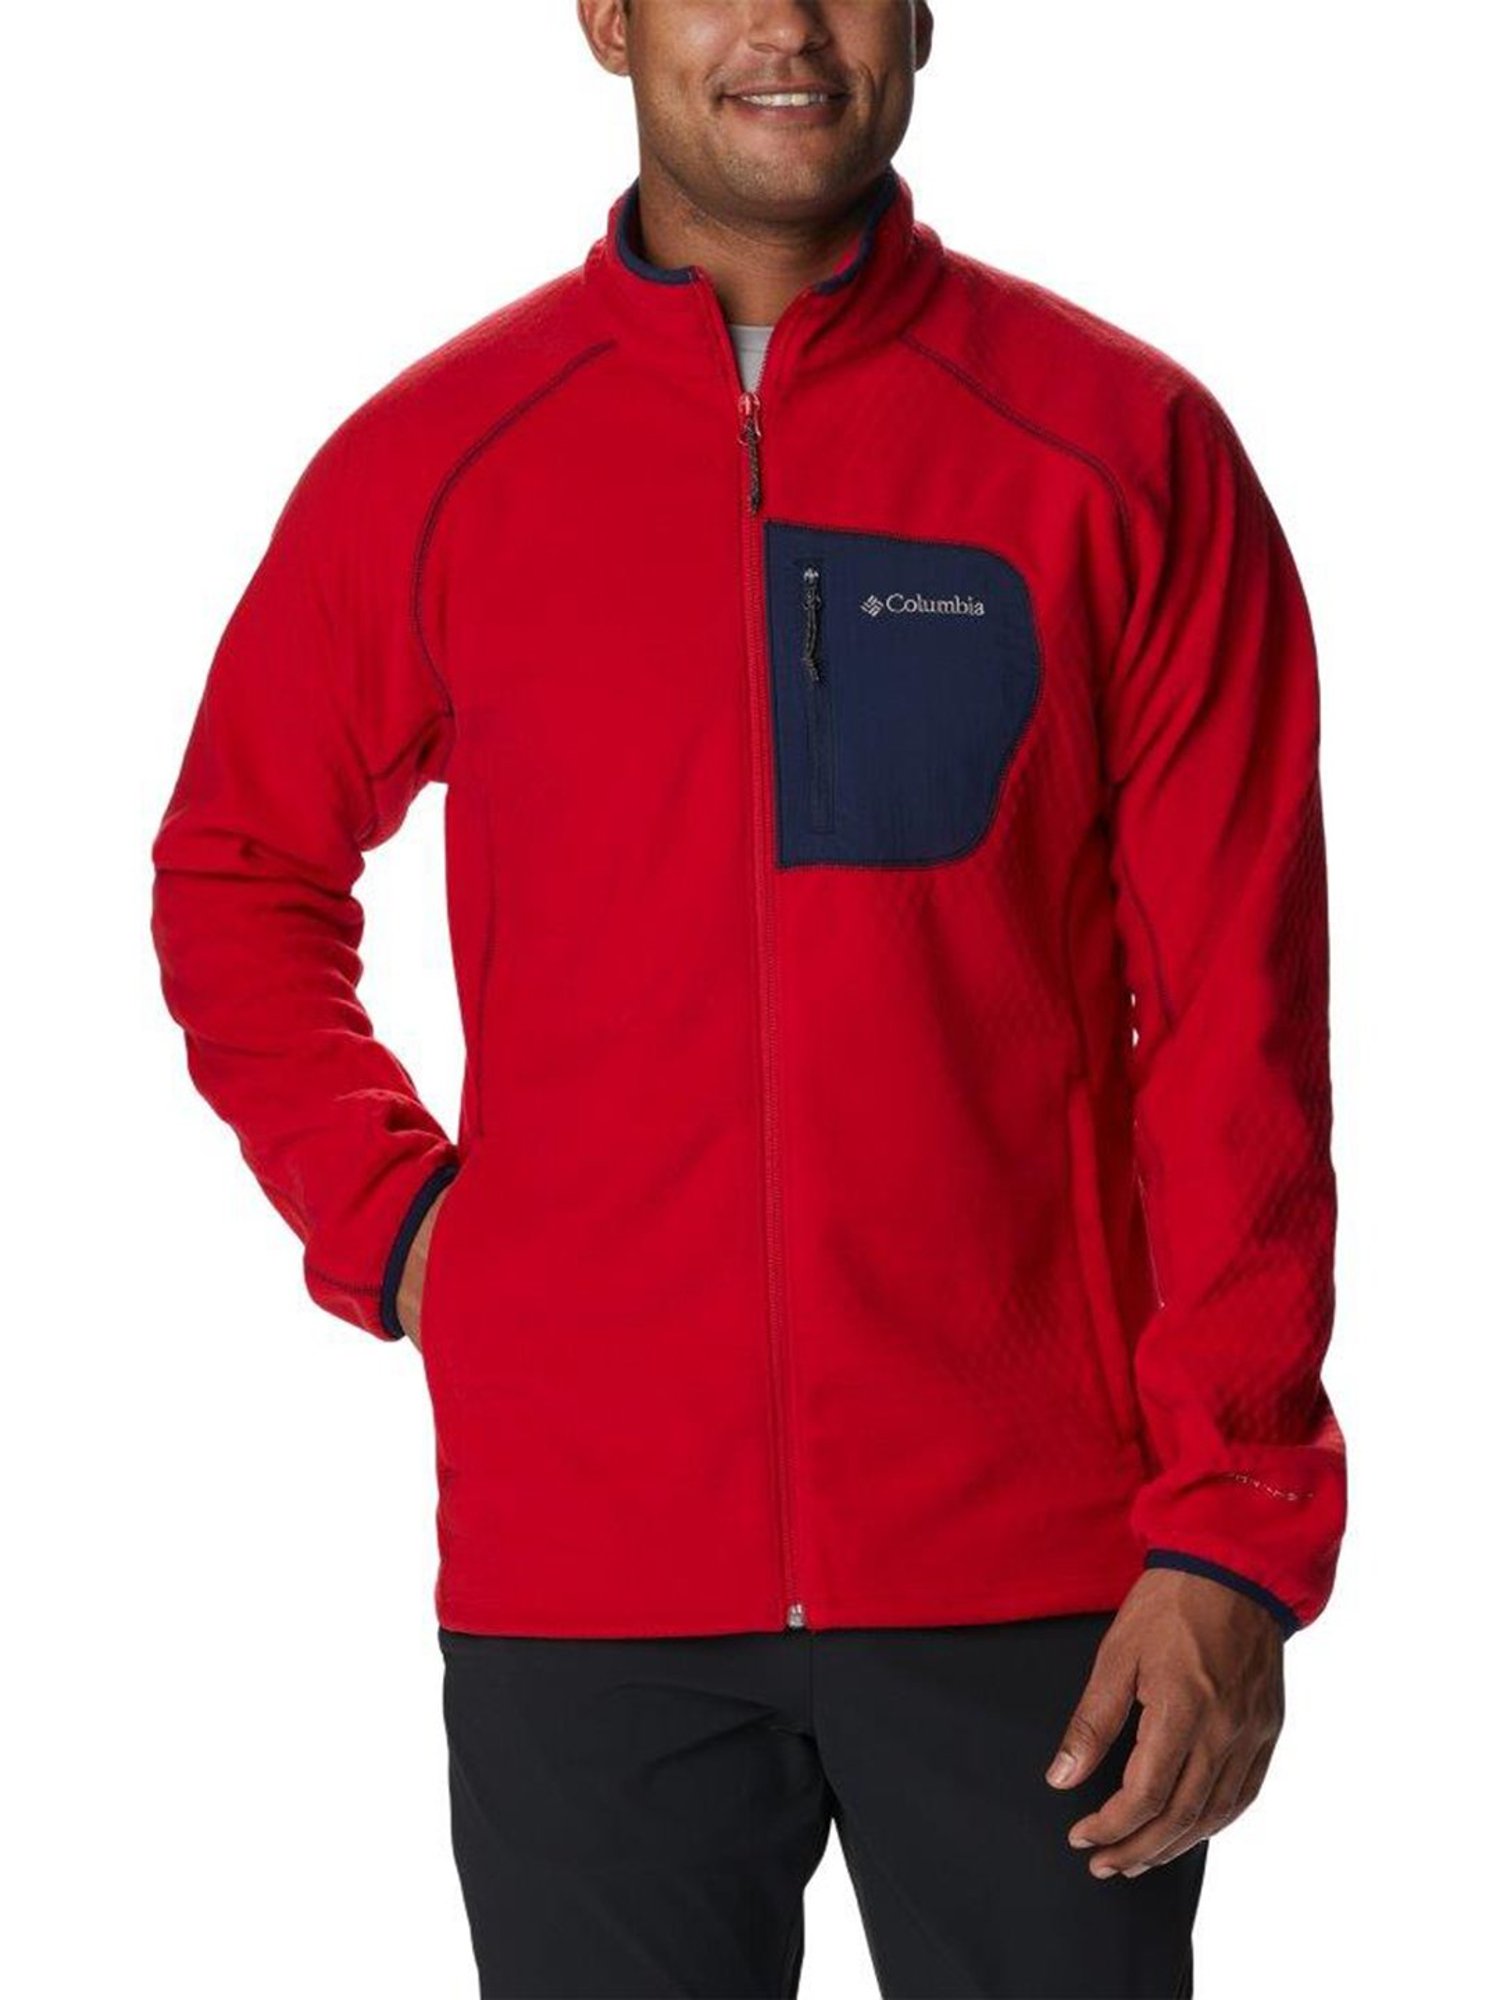 Buy Columbia Red Full Sleeves Nylon Jacket for Men's Online @ Tata CLiQ